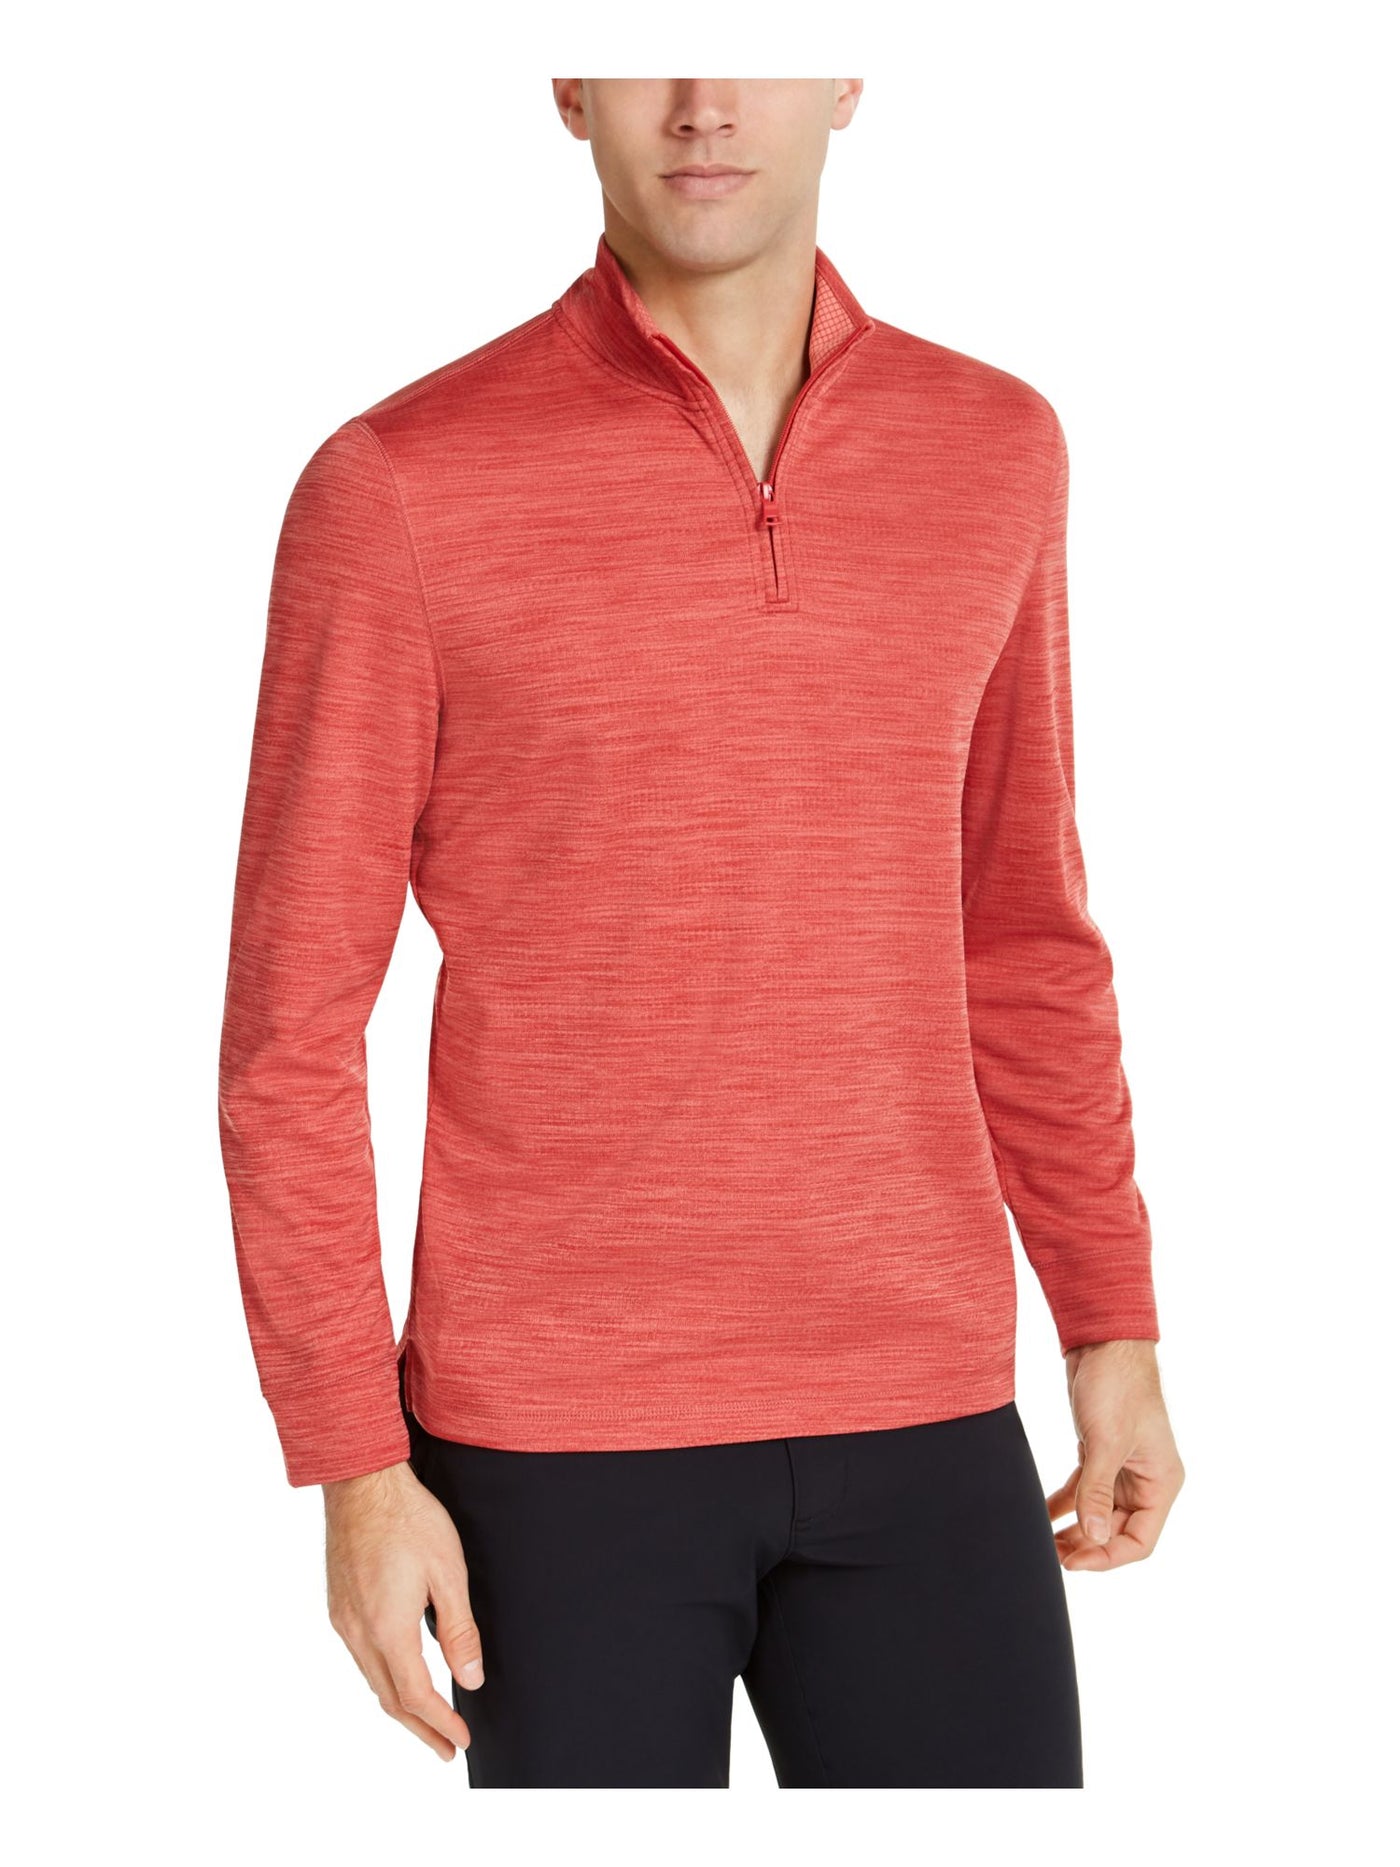 CLUBROOM Mens Orange Printed Collared Quarter-Zip Sweatshirt XXL